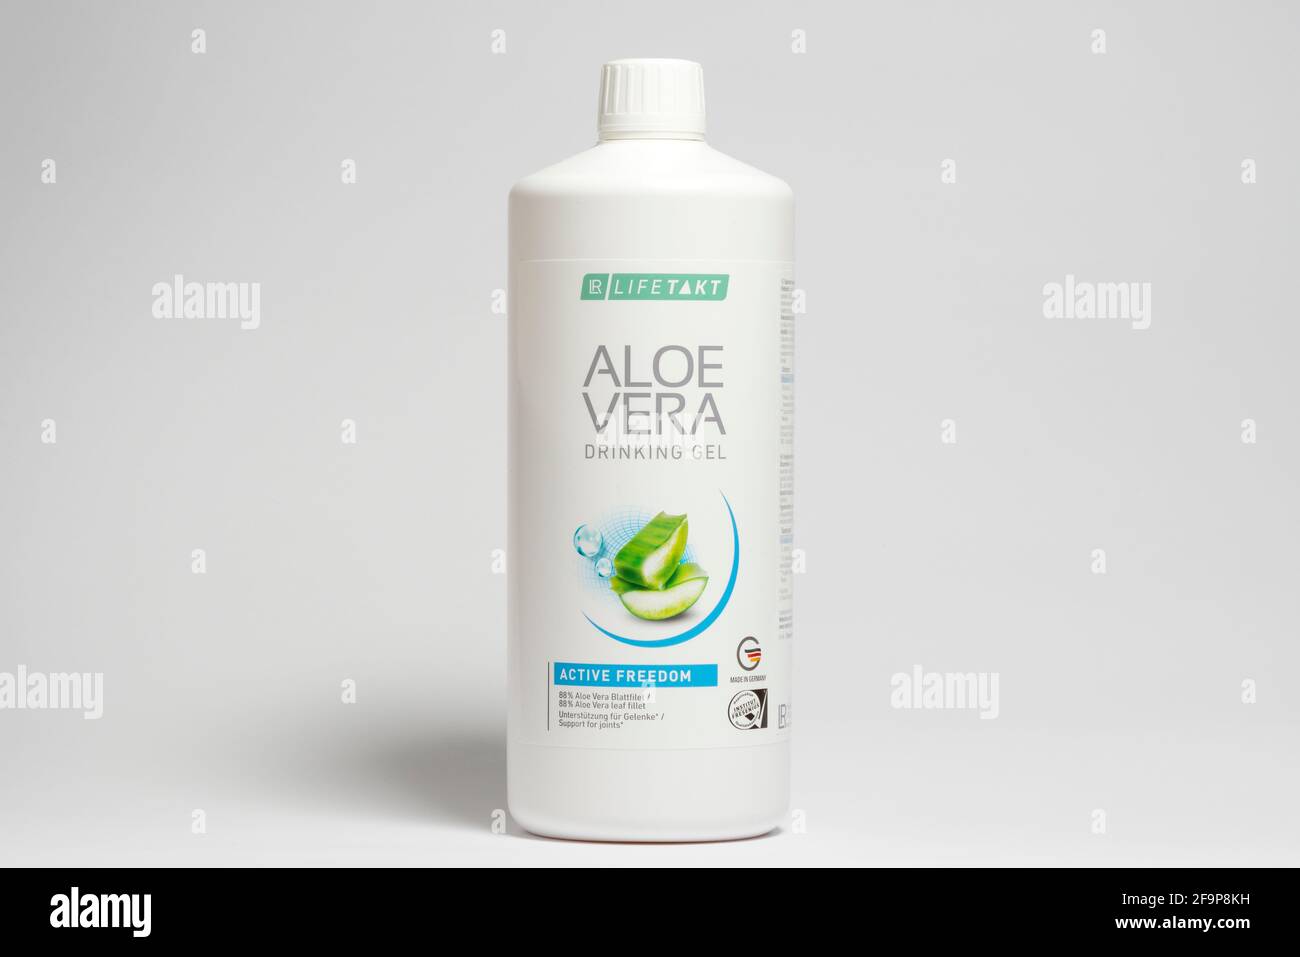 https://c8.alamy.com/compes/2f9p8kh/aloe-vera-gel-para-beber-500ml-botella-sobre-blanco-2f9p8kh.jpg